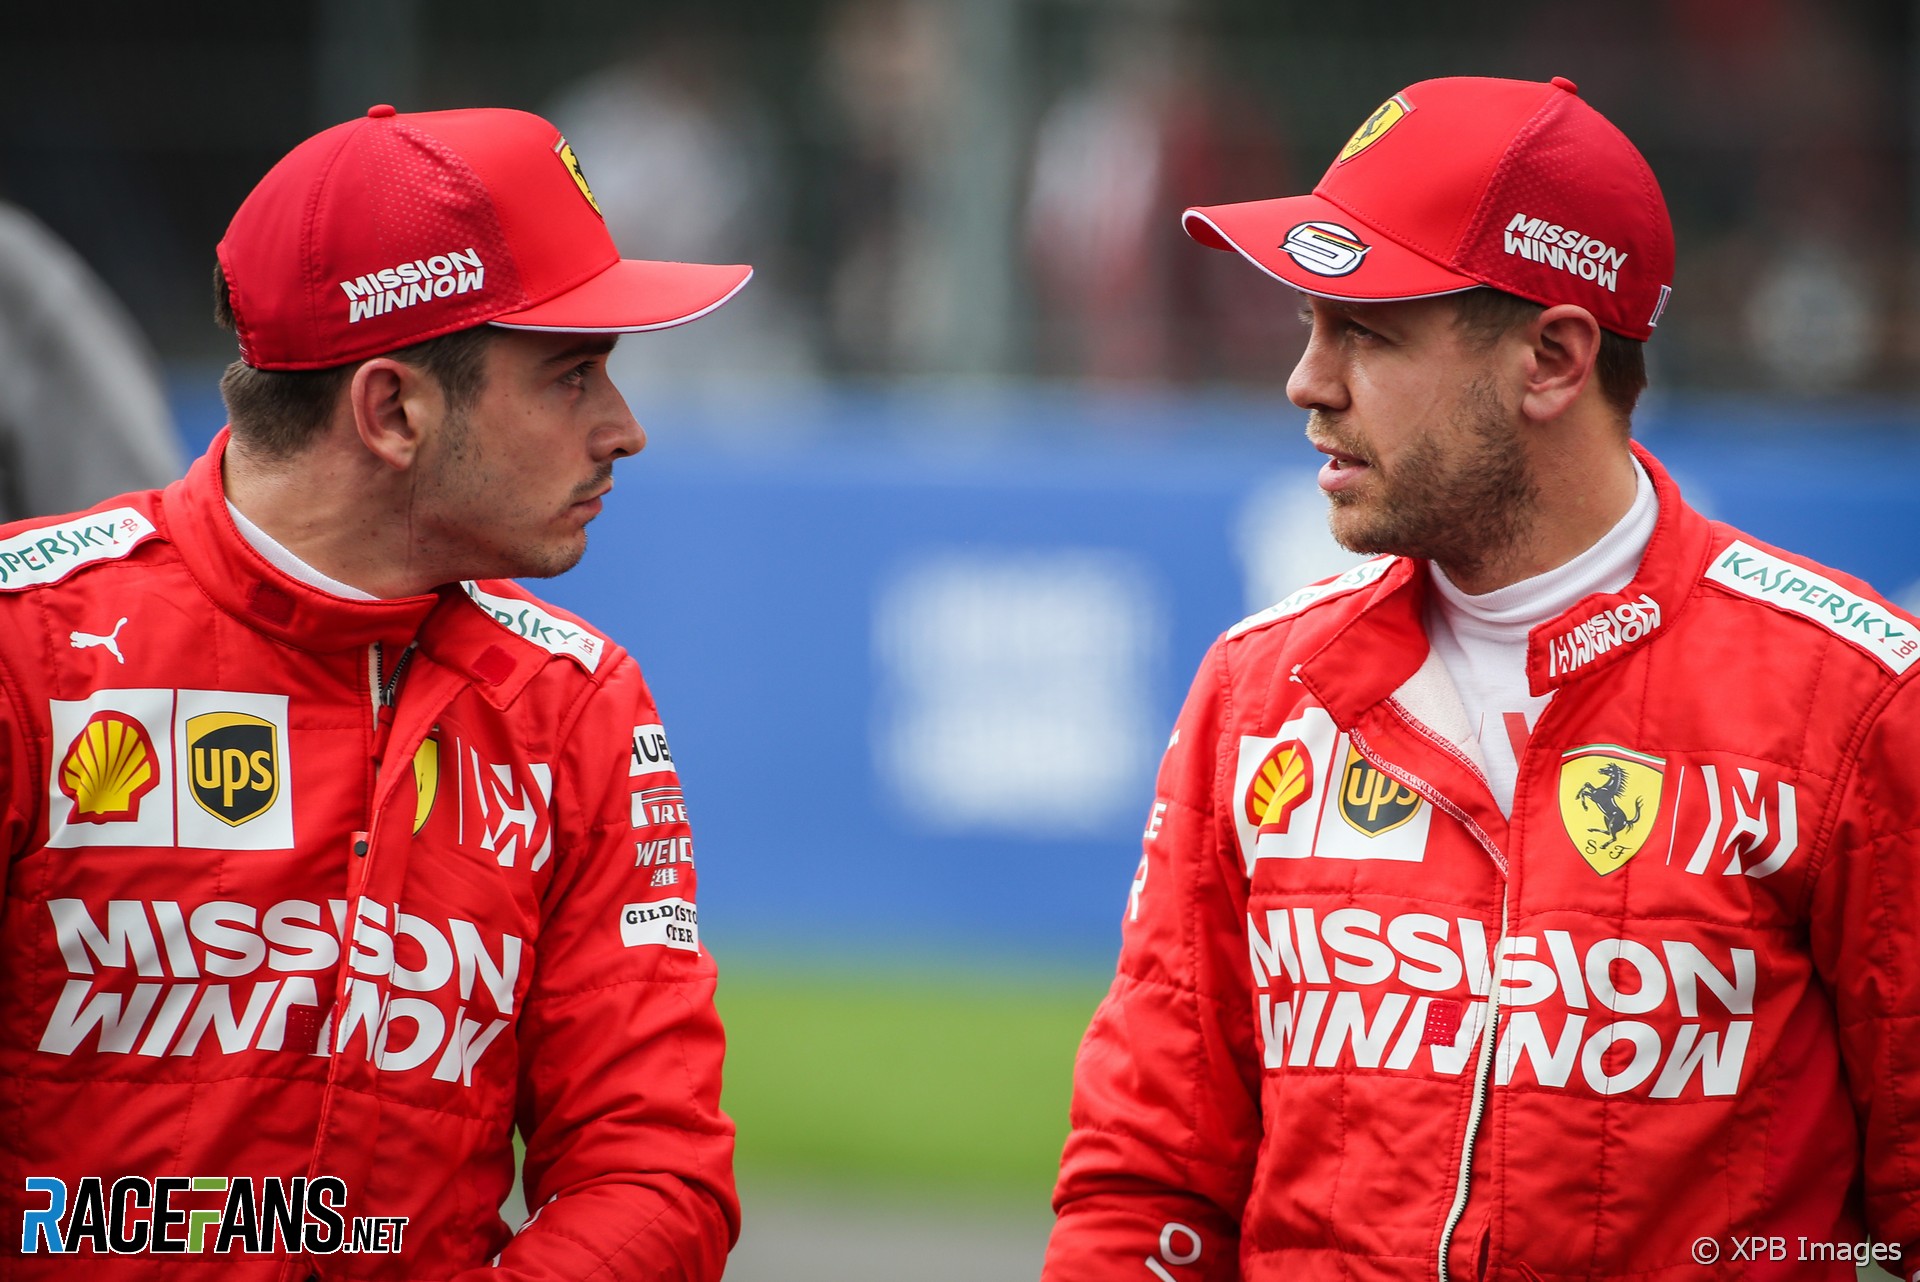 Charles Leclerc, Sebastian Vettel, Ferrari, Autodromo Hermanos Rodriguez, 2019